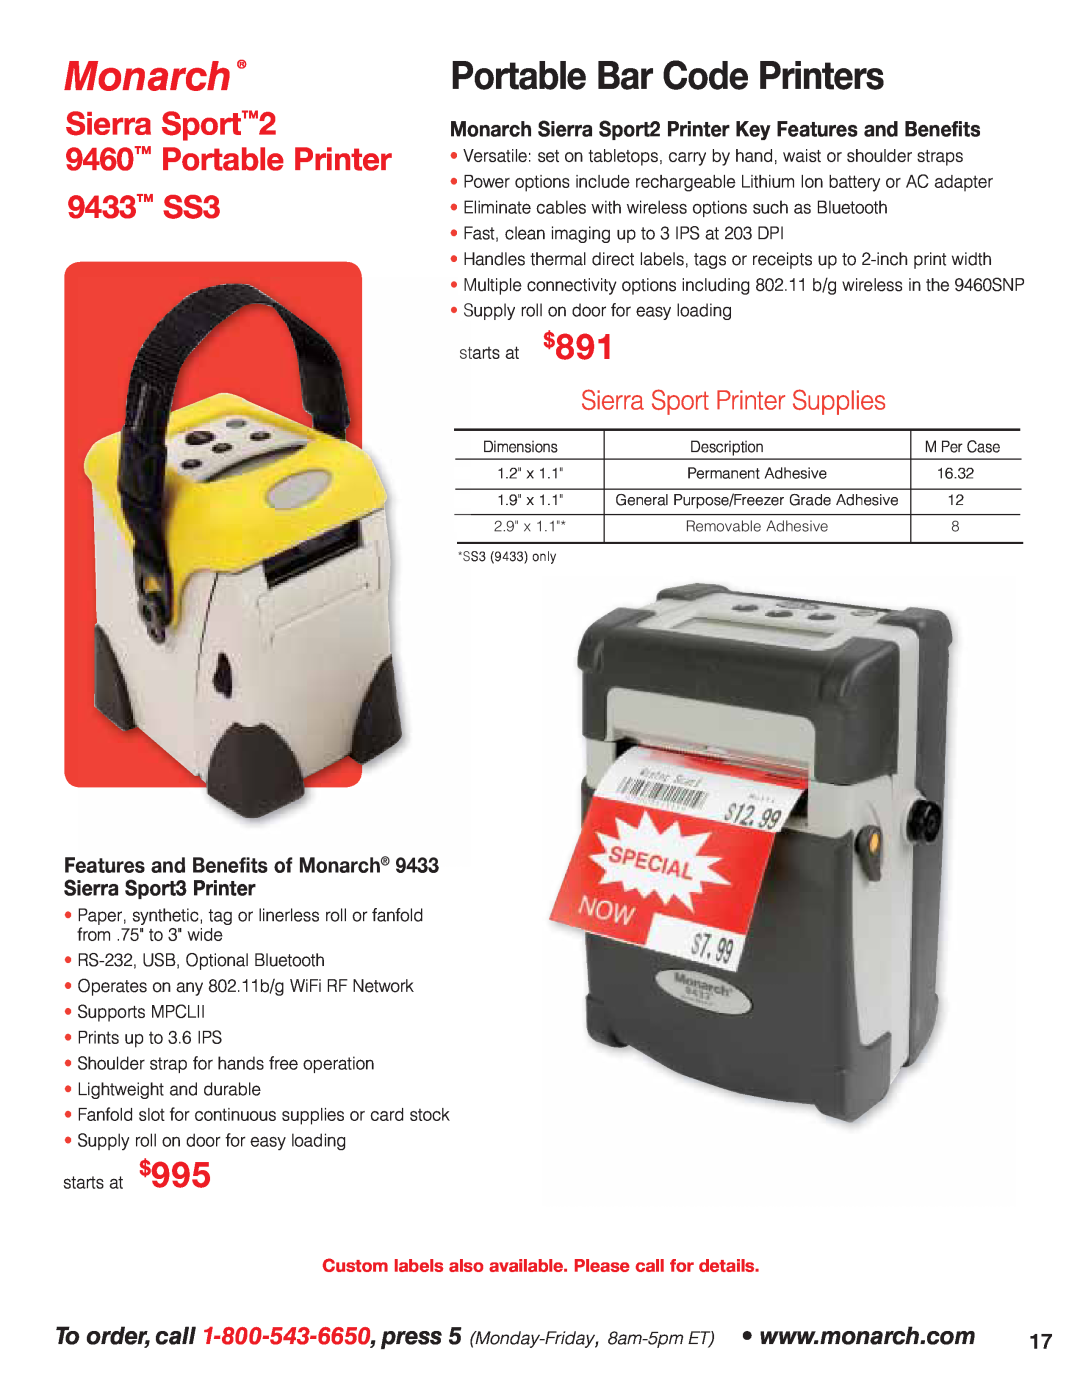 Avery 9860 Portable Bar Code Printers, Sierra Sport2, Portable Printer, 9433 SS3, Sierra Sport Printer Supplies, Monarch 